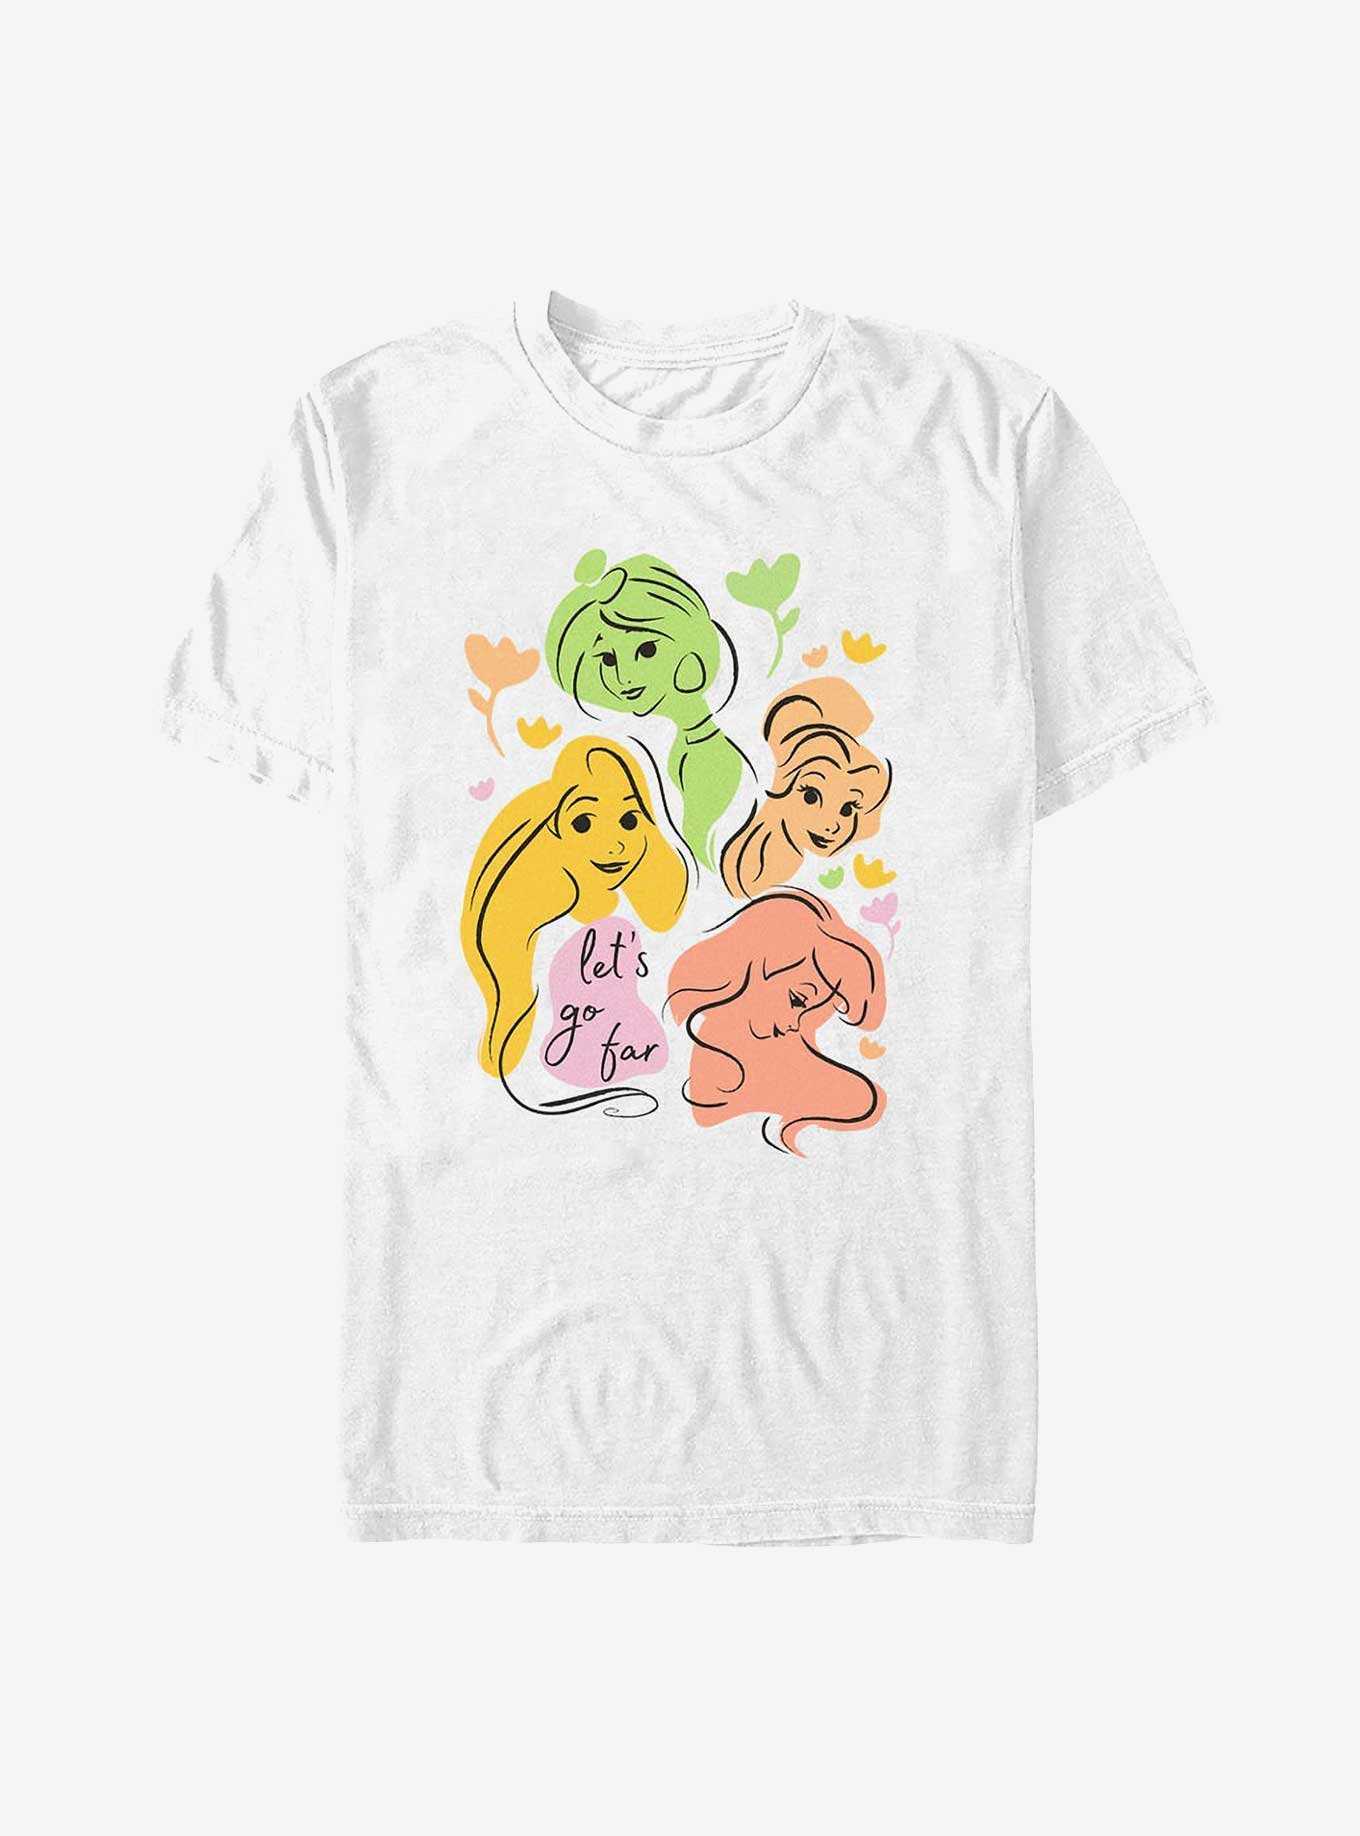 Disney Princess Abstract Princesses T-Shirt, , hi-res